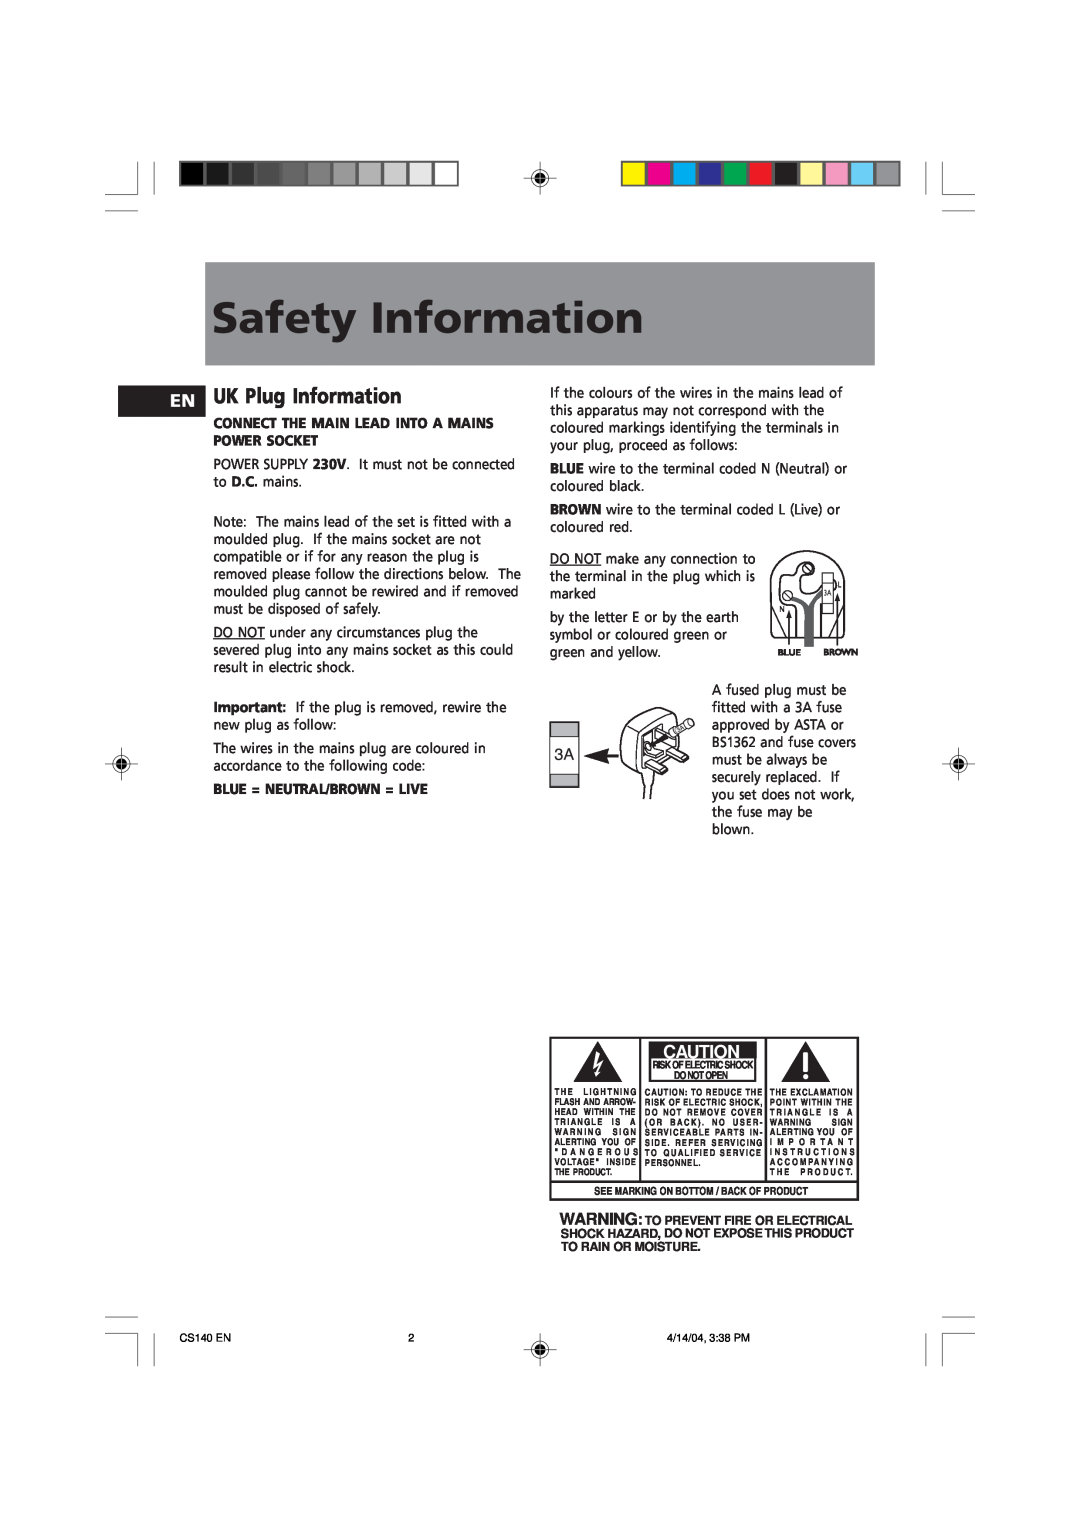 Technicolor - Thomson CS140 user service Safety Information, UK Plug Information 